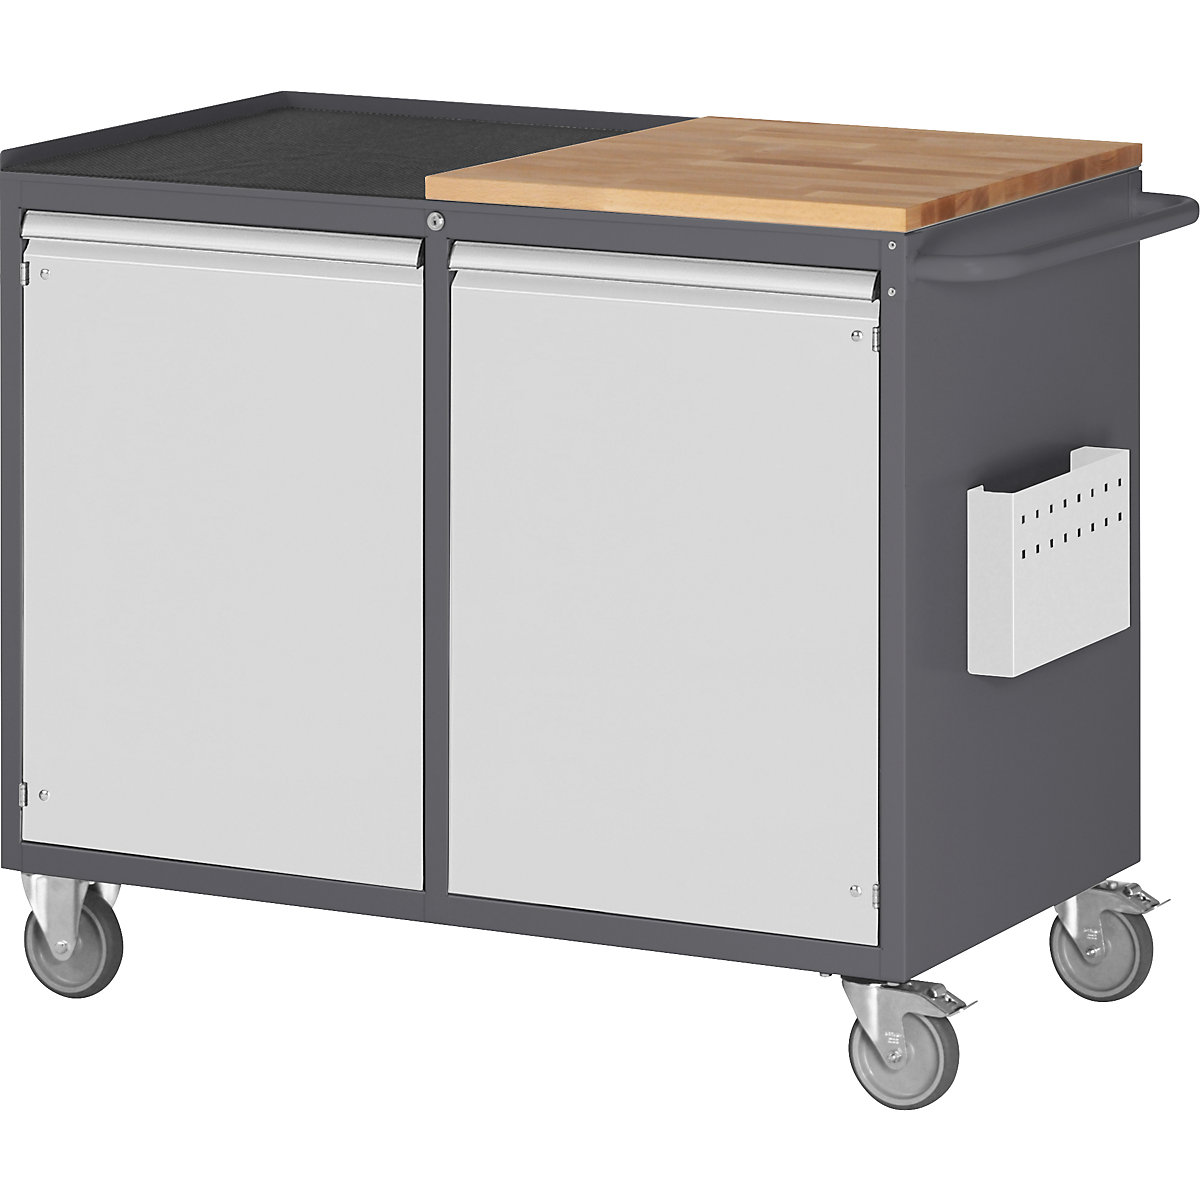 Compact workbenches, mobile – RAU, 2 doors, wood / metal work surface, charcoal / light grey-2